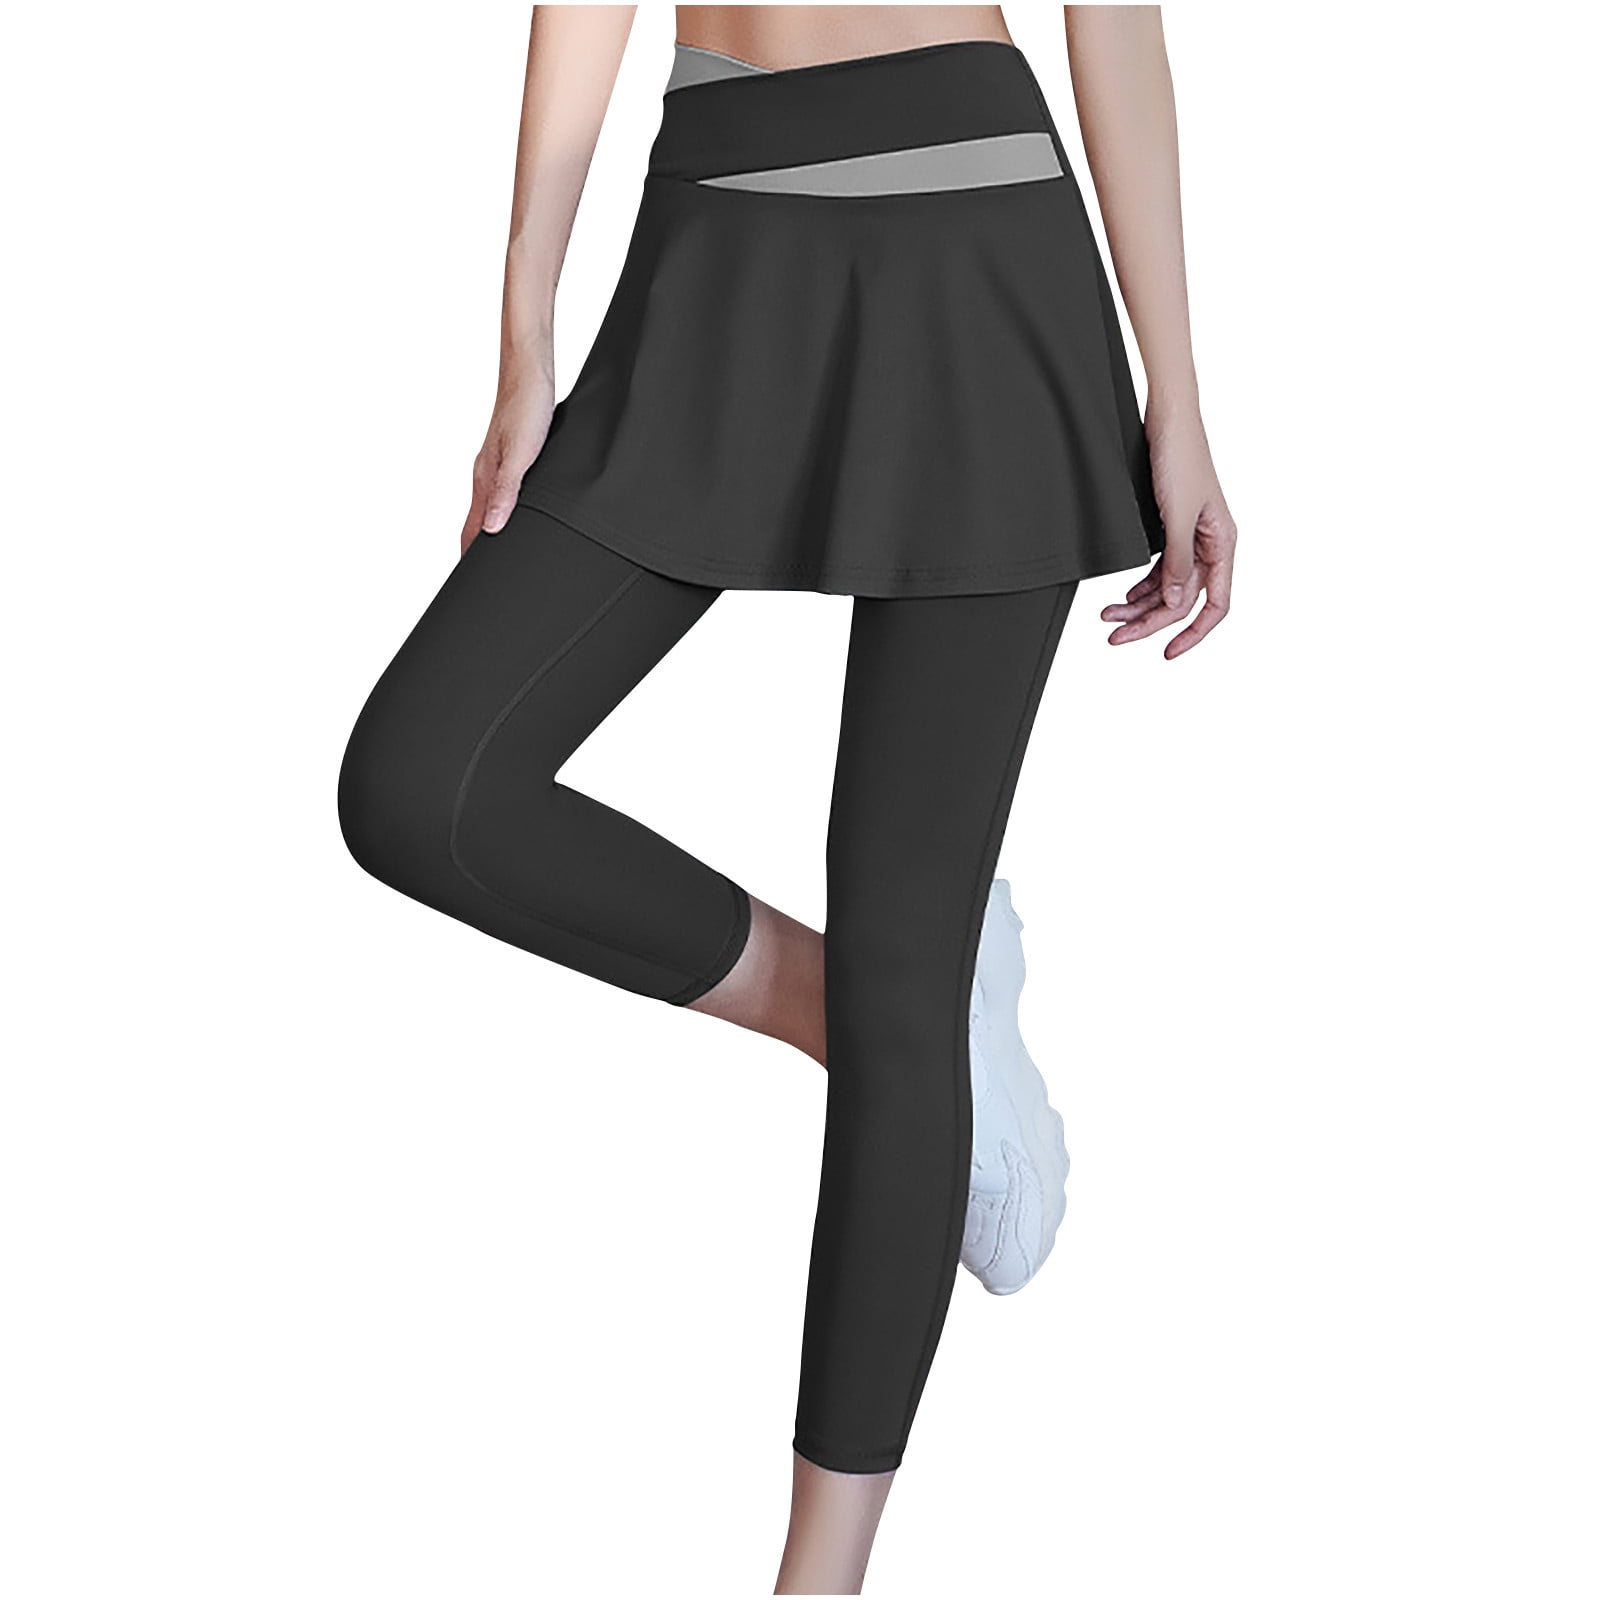 90 Degree By Reflex, Pants & Jumpsuits, 9 Degree By Reflex Yoga Pants  Leggings